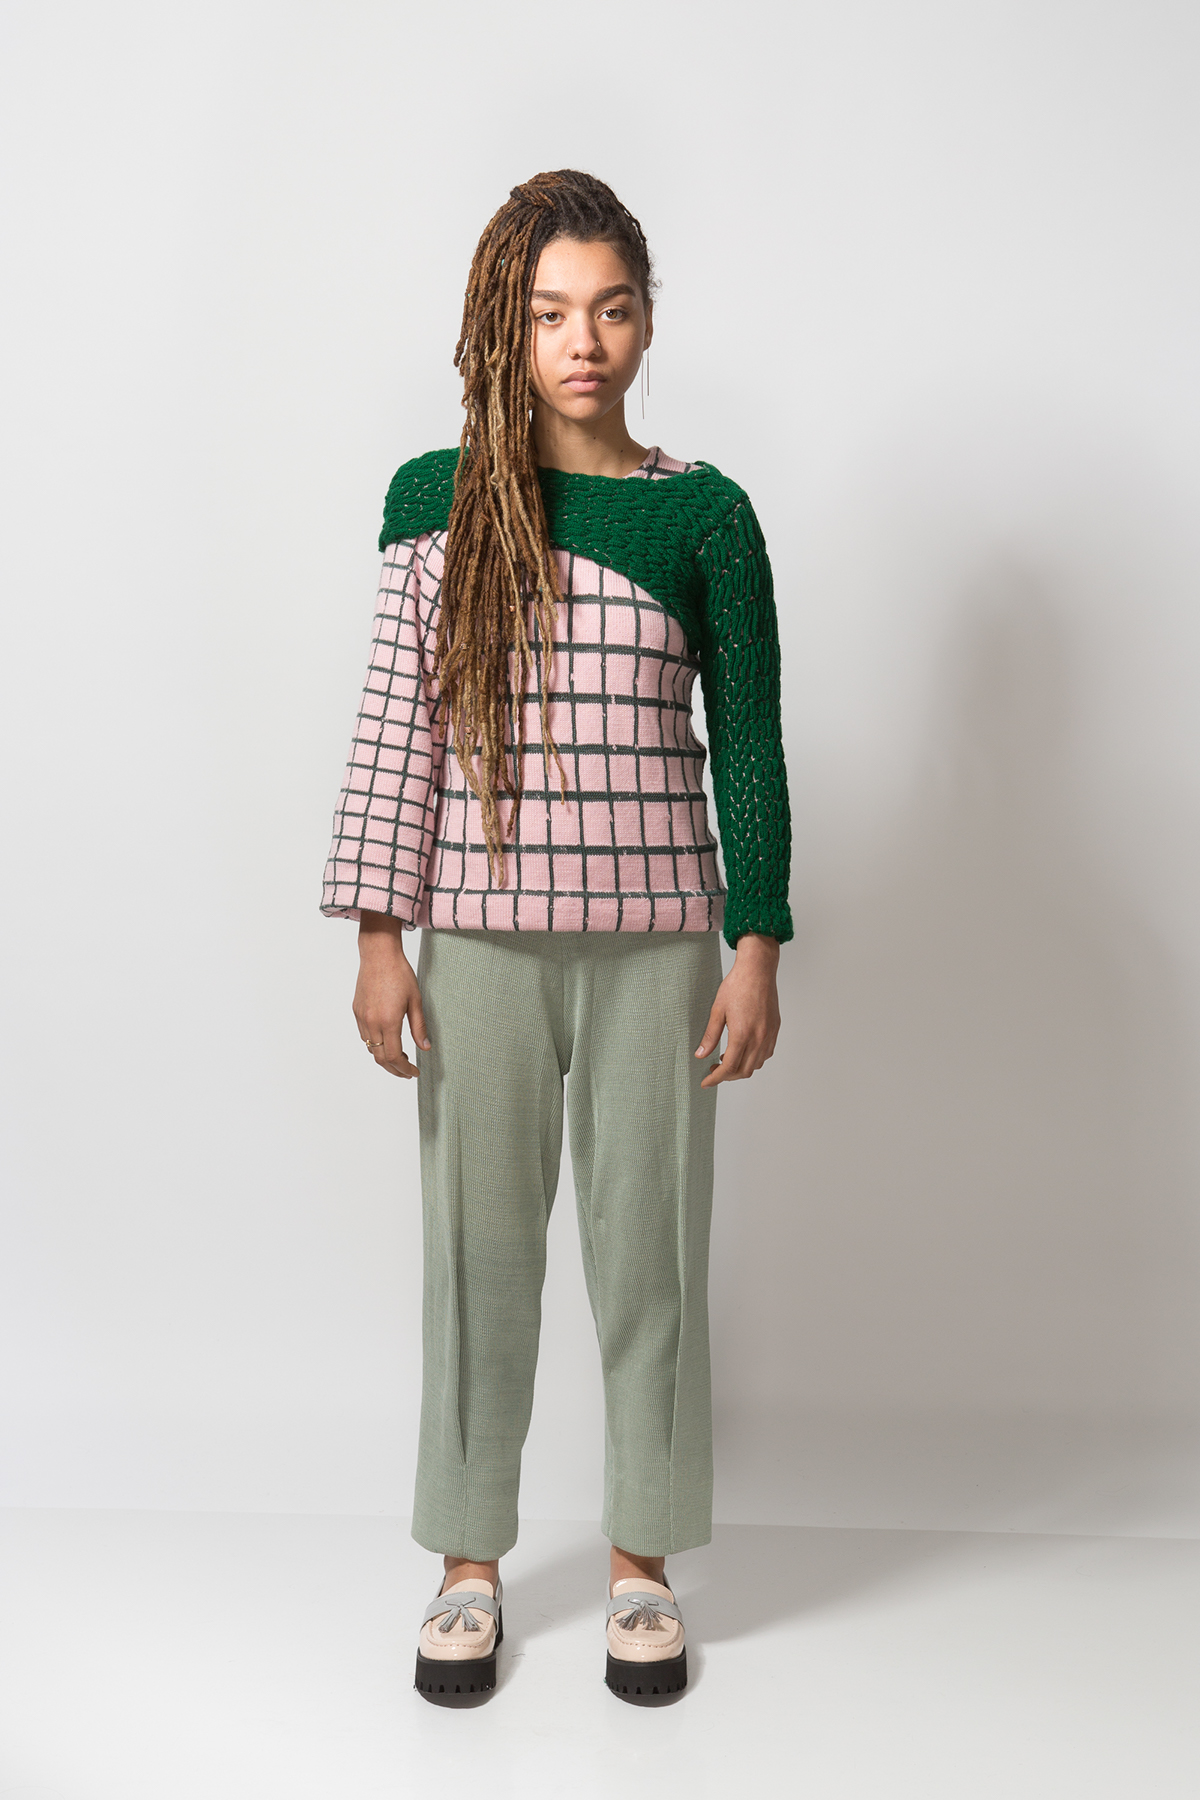 risd apparel RISD Apparel Garments Style JVSV